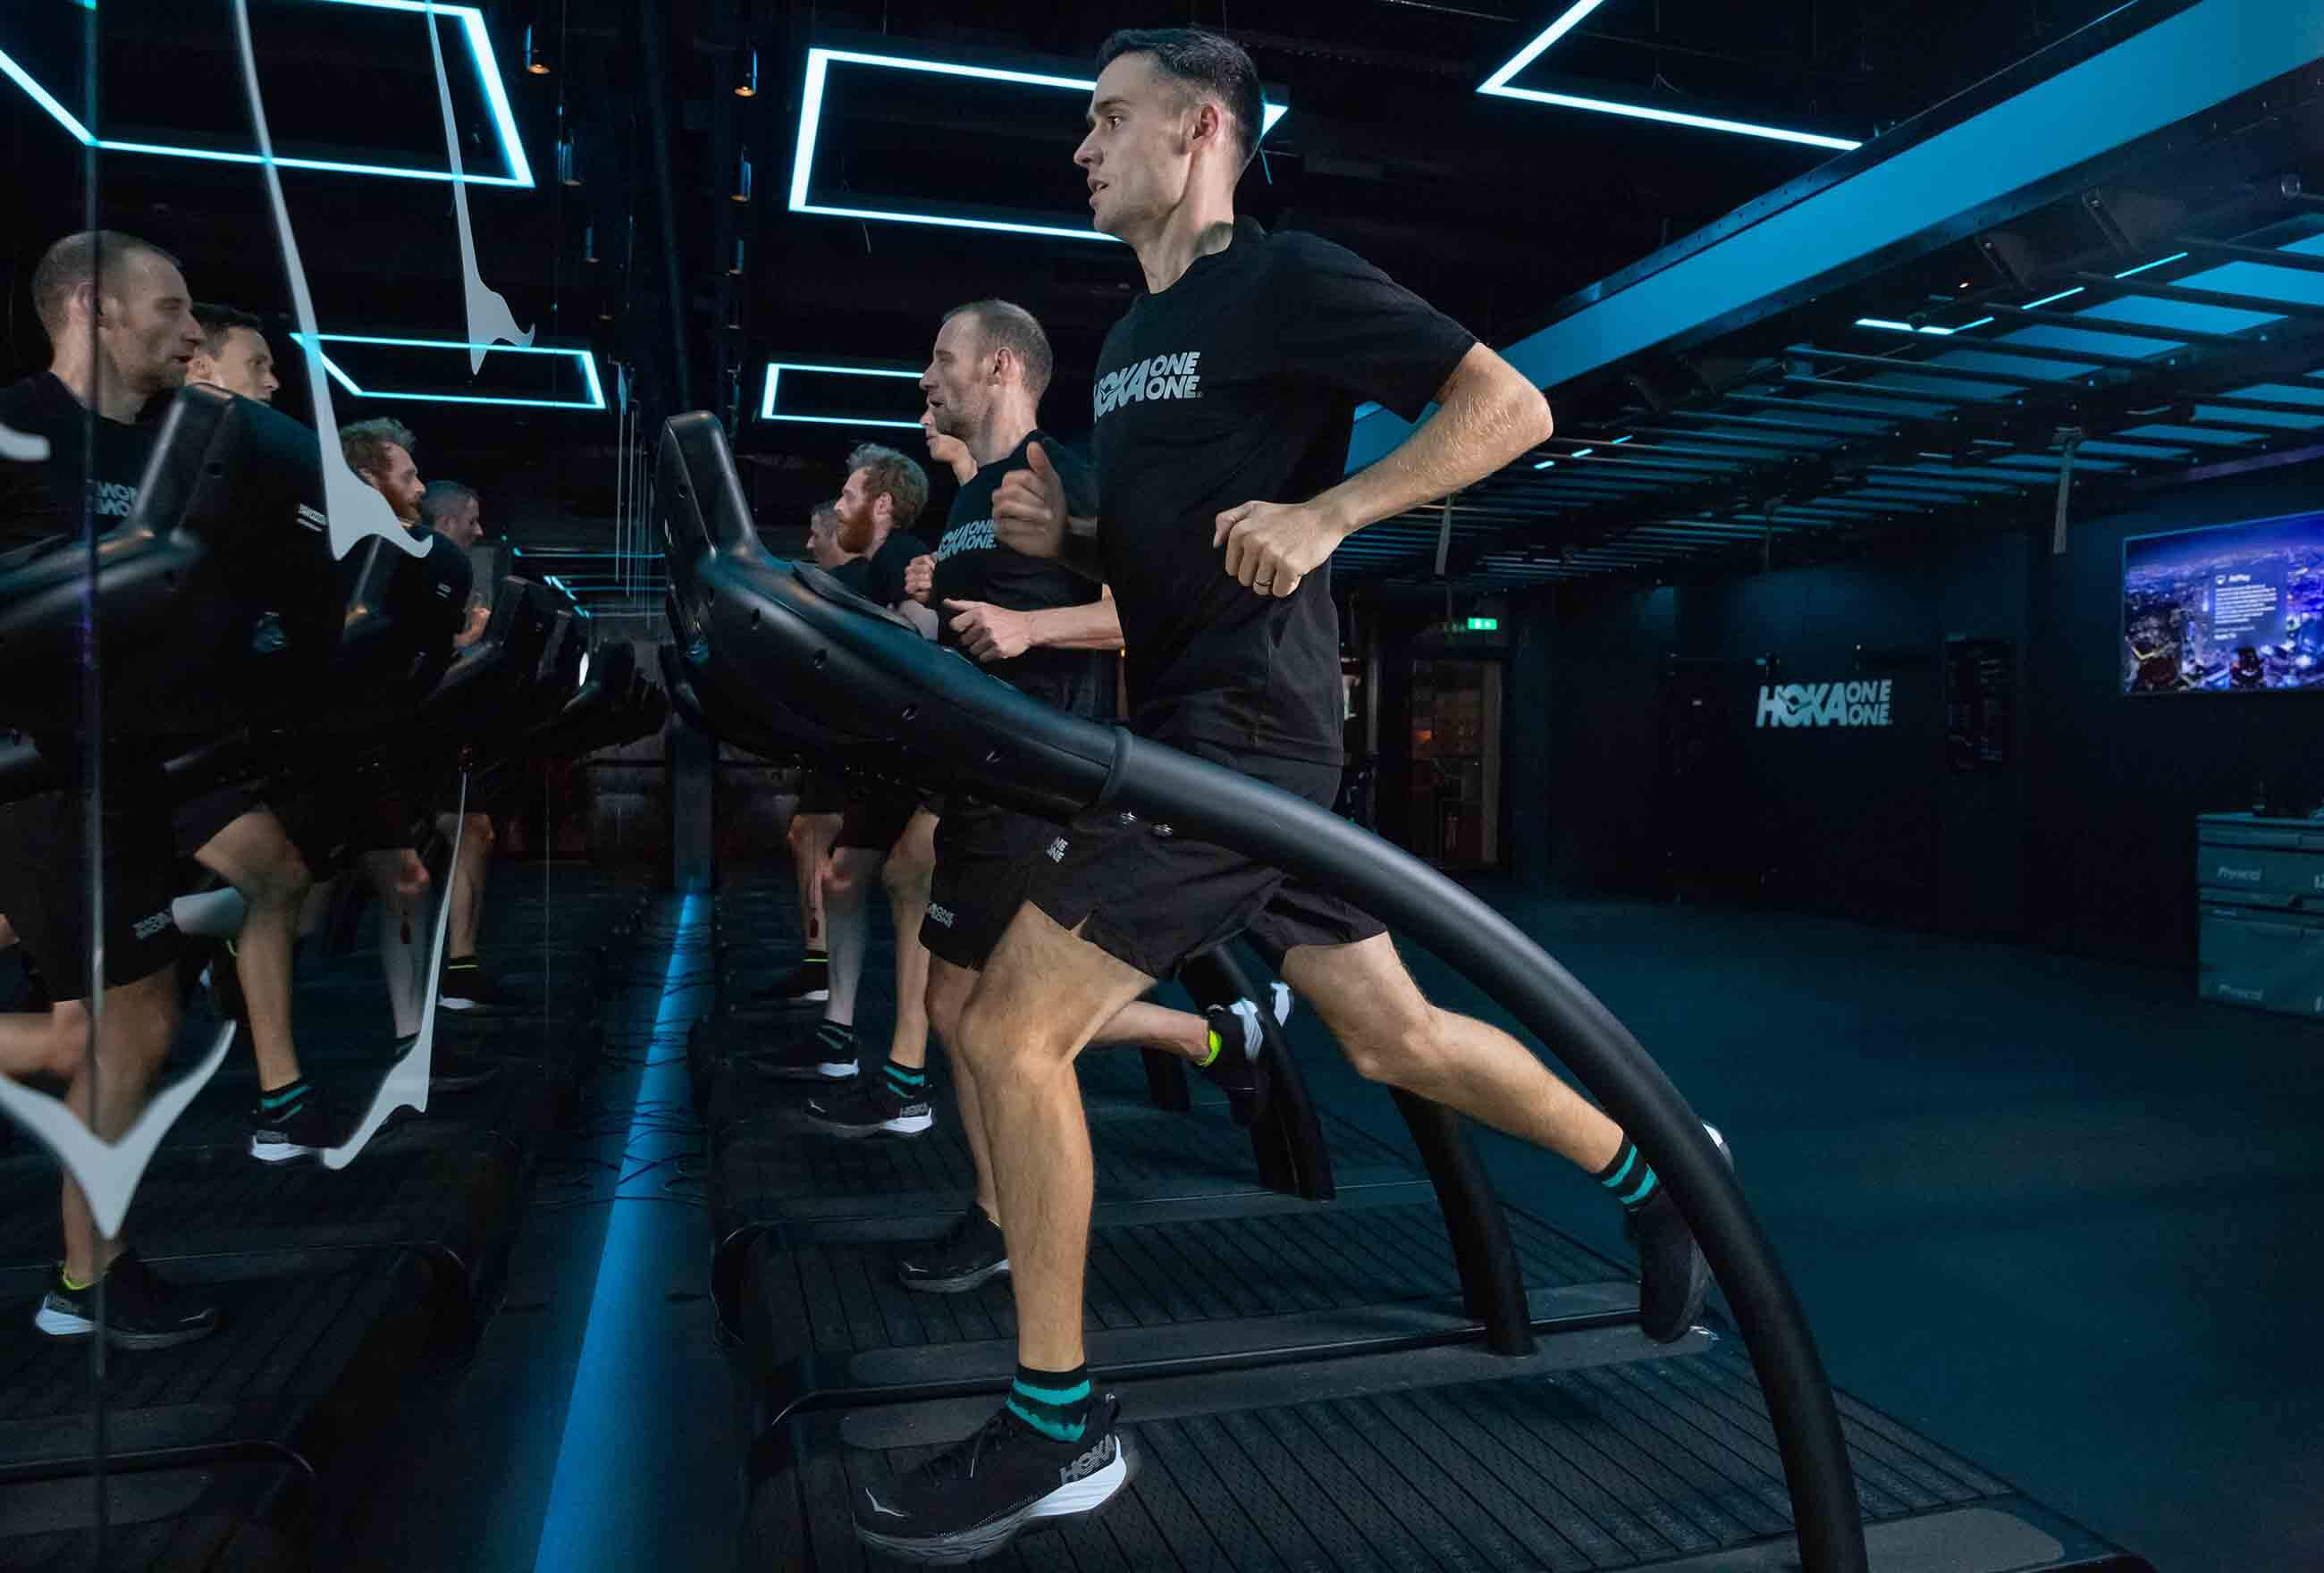 HOKA elite athlete Adam Hickey runs on the treadmill at the Fly at Night event in London